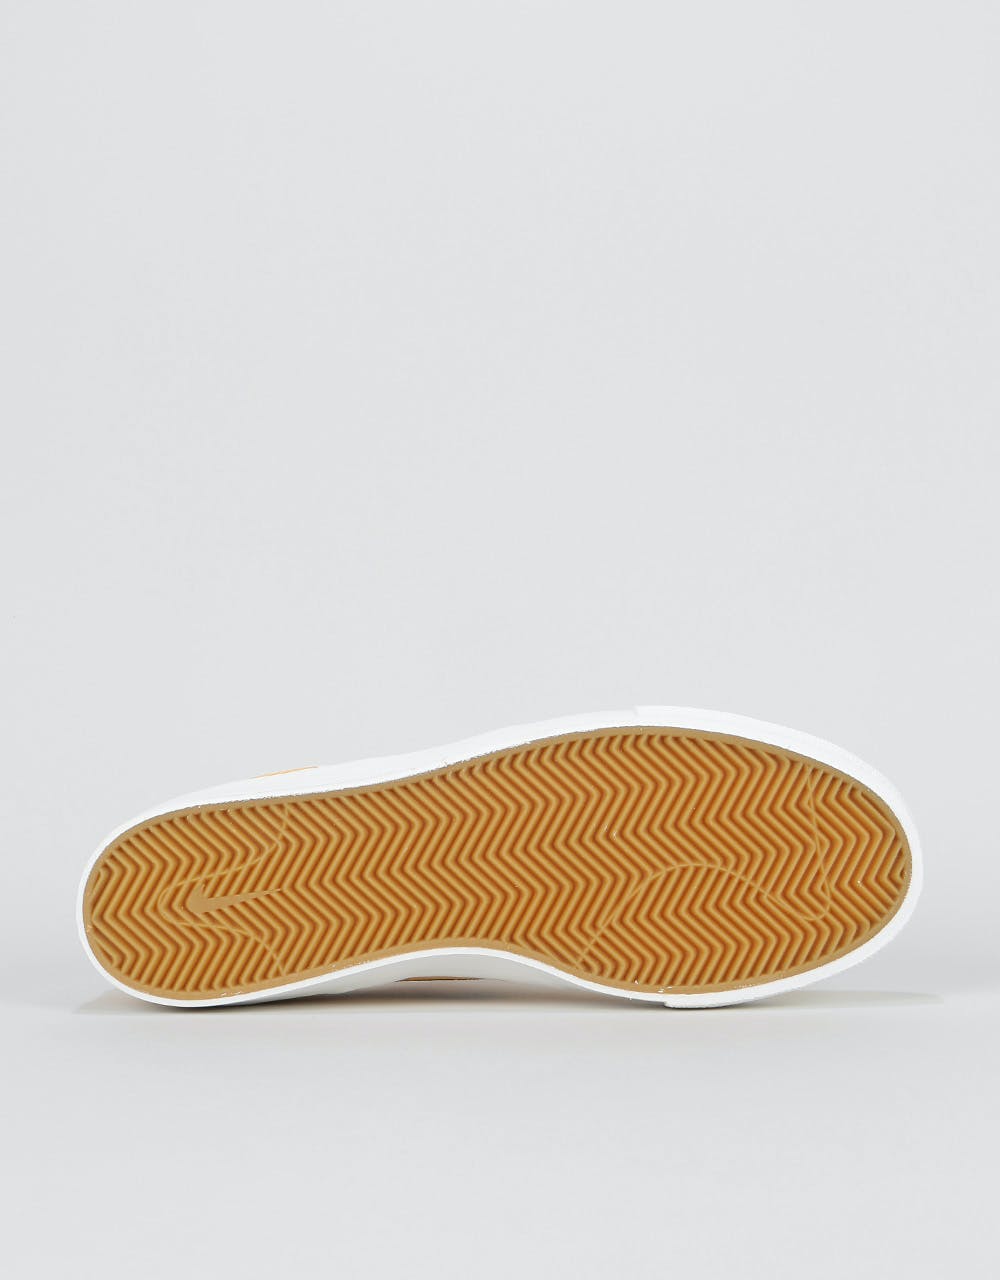 Nike SB Zoom Janoski RM Skate Shoes - Celestial Gold/Anthracite-White